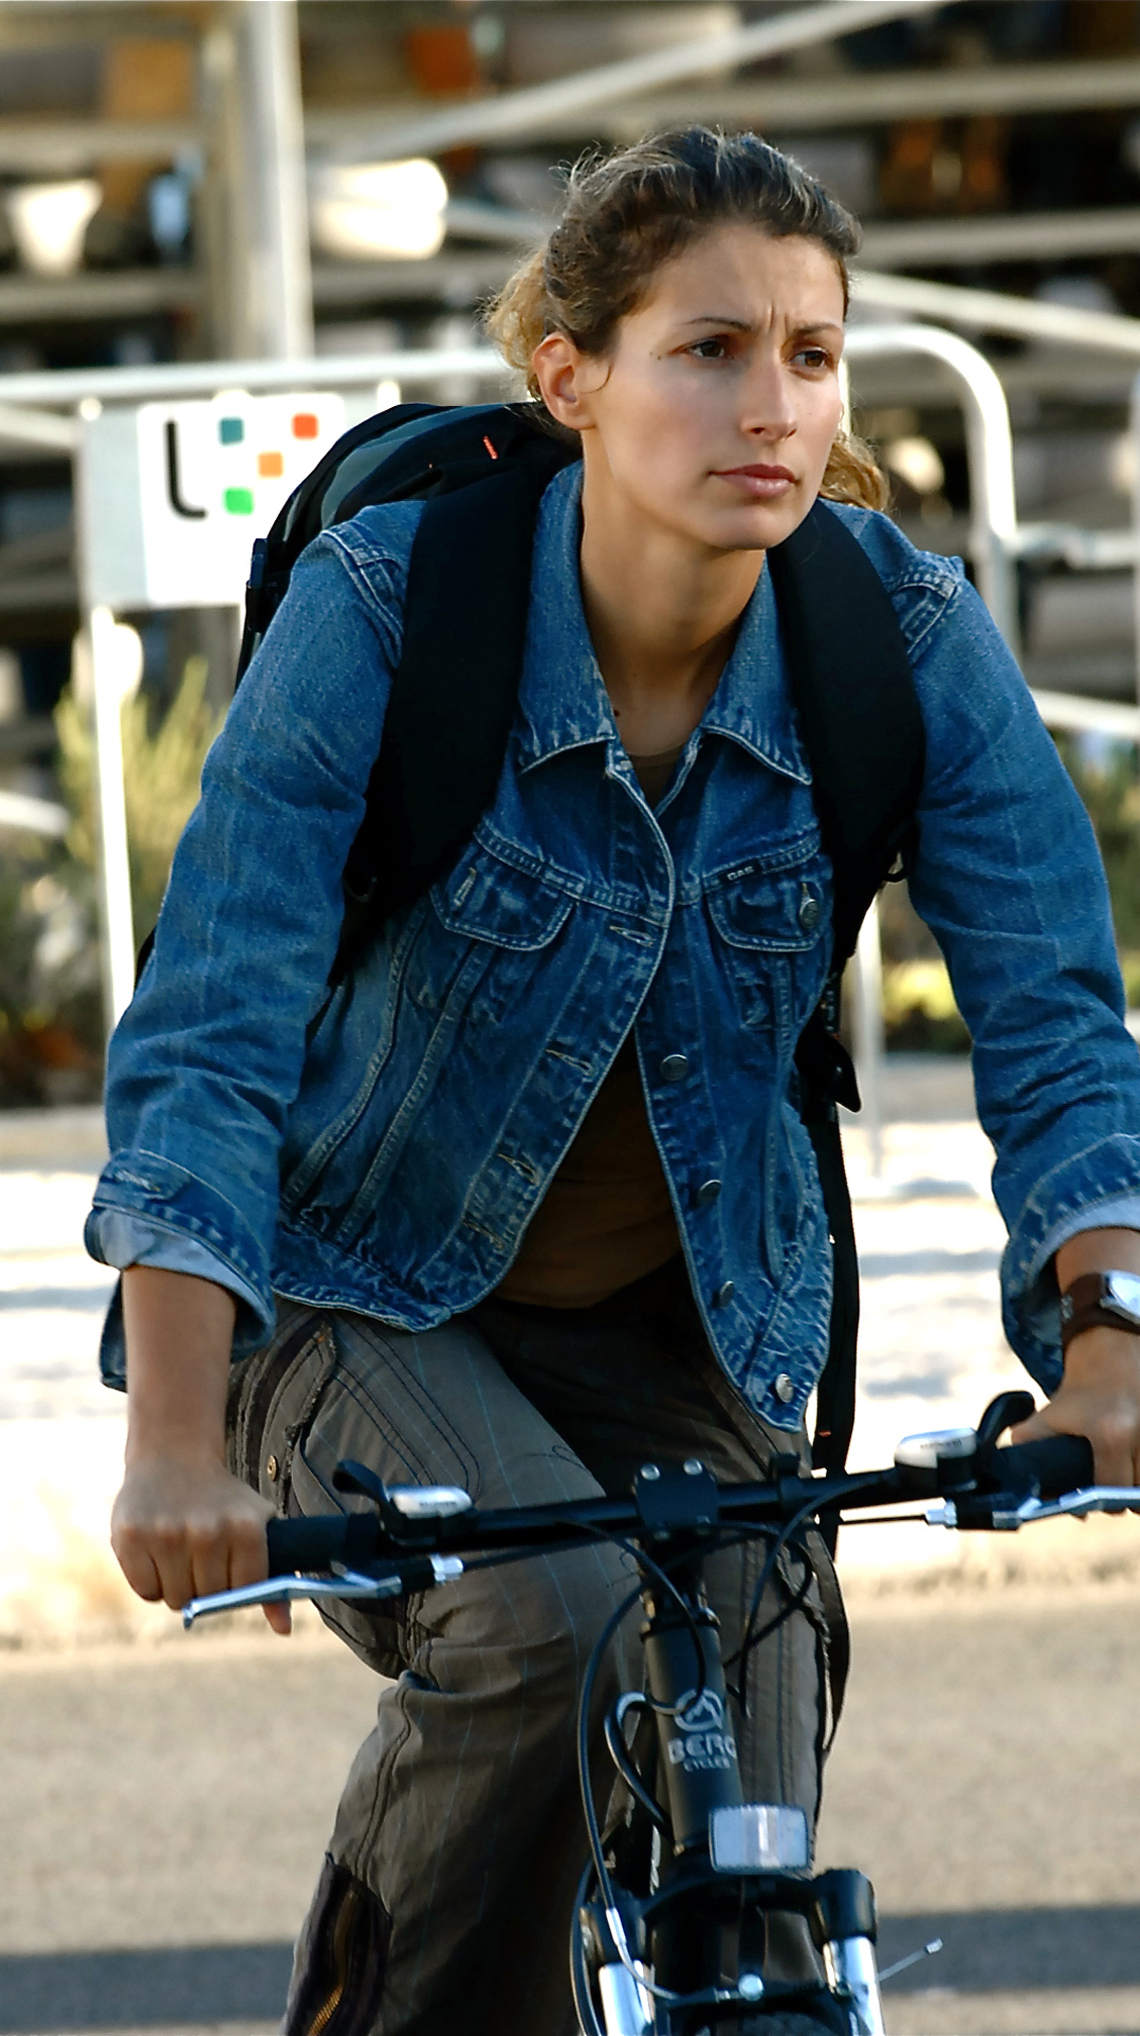 Chicas en Bici ||| Woman on a bicycle set